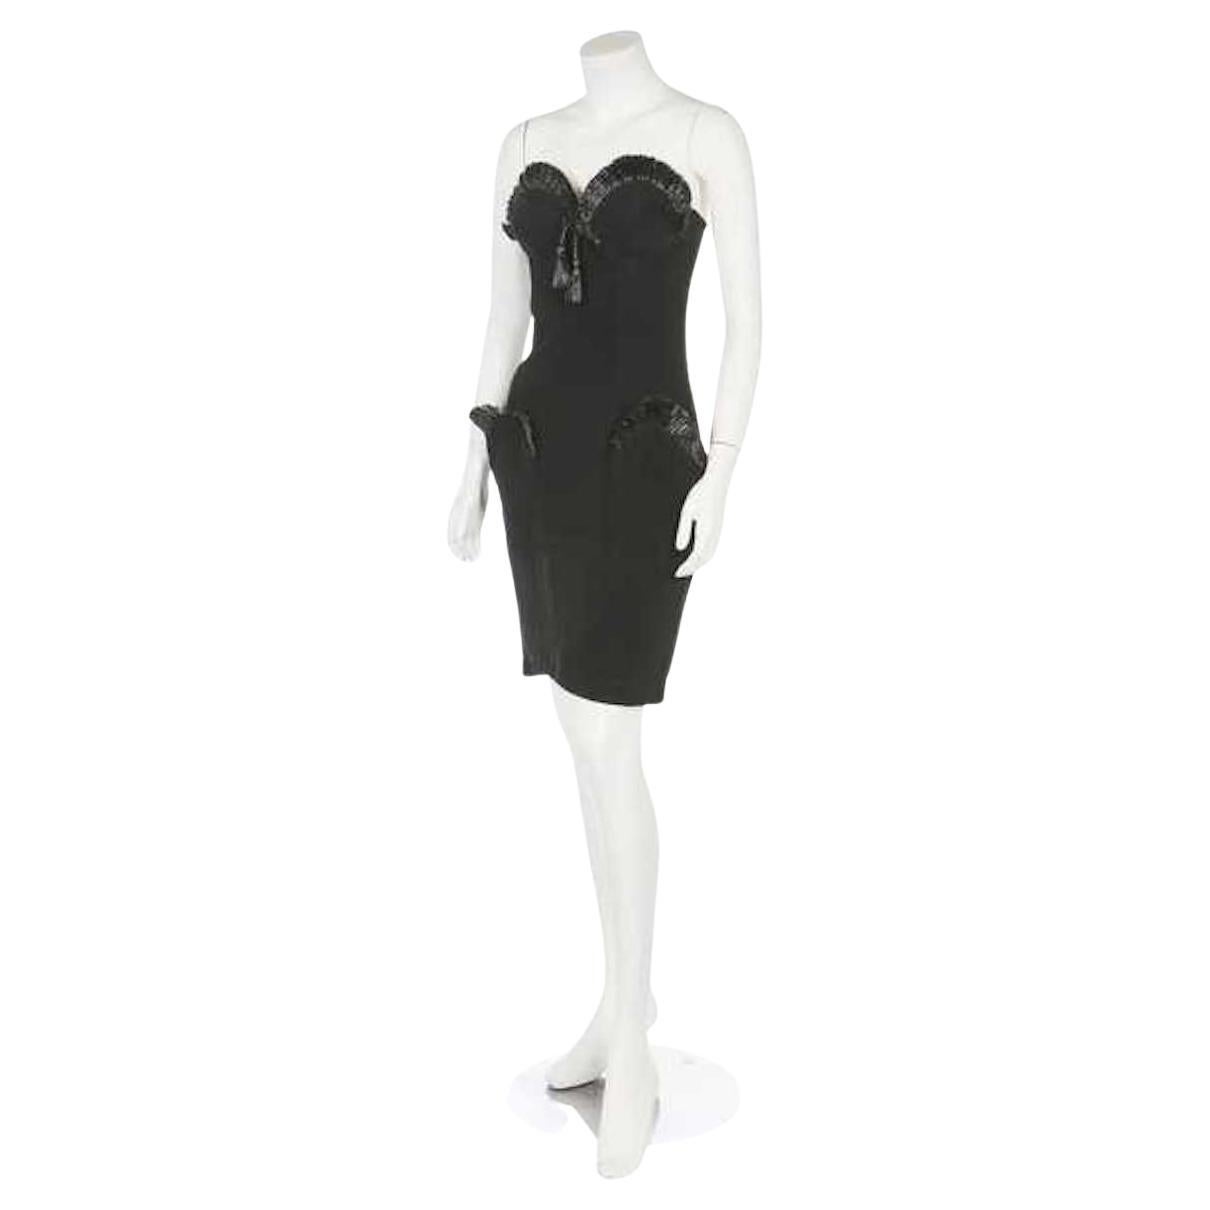 S/S 1995 Thierry Mugler black raffia strapless cocktail dress